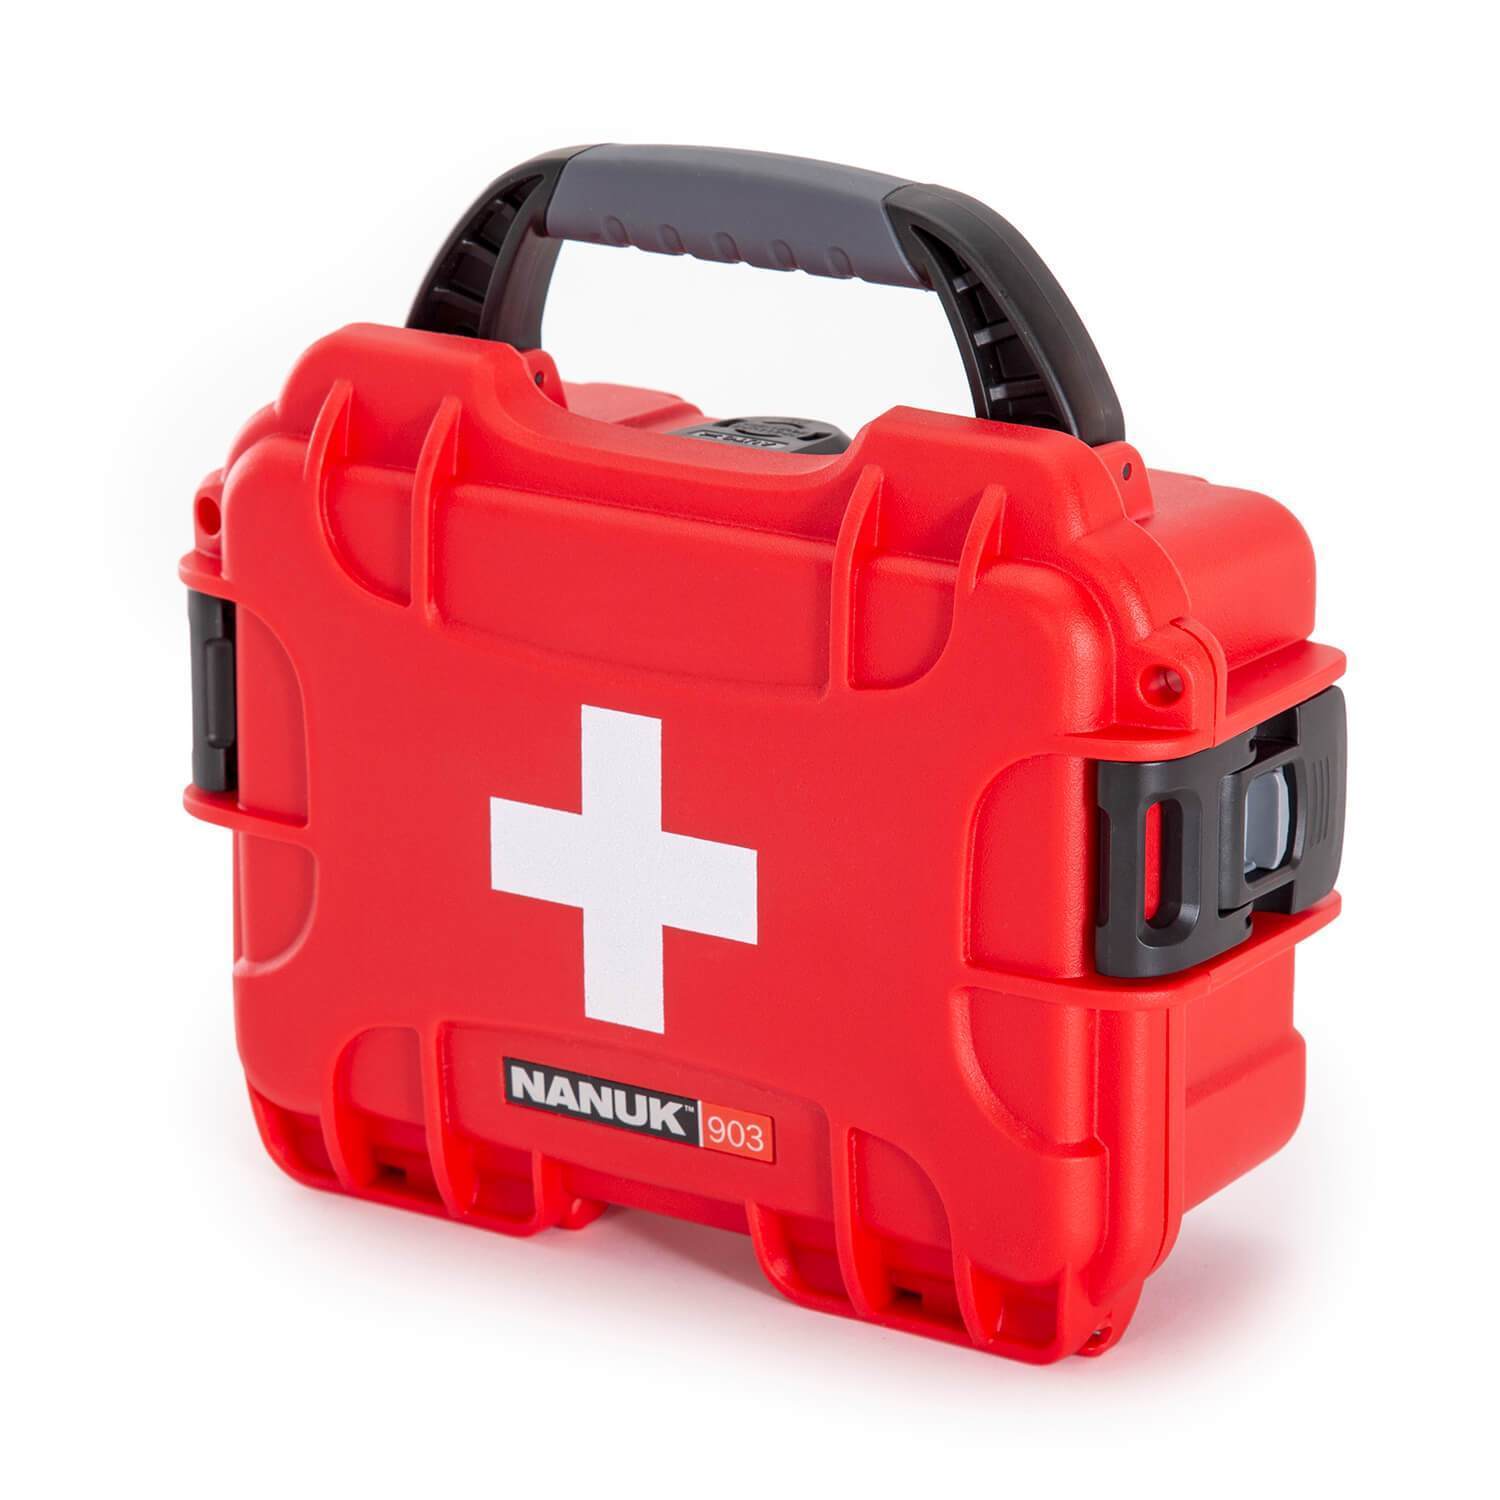 NANUK 903 First Aid valise-Outdoor Valise-Rouge-NANUK